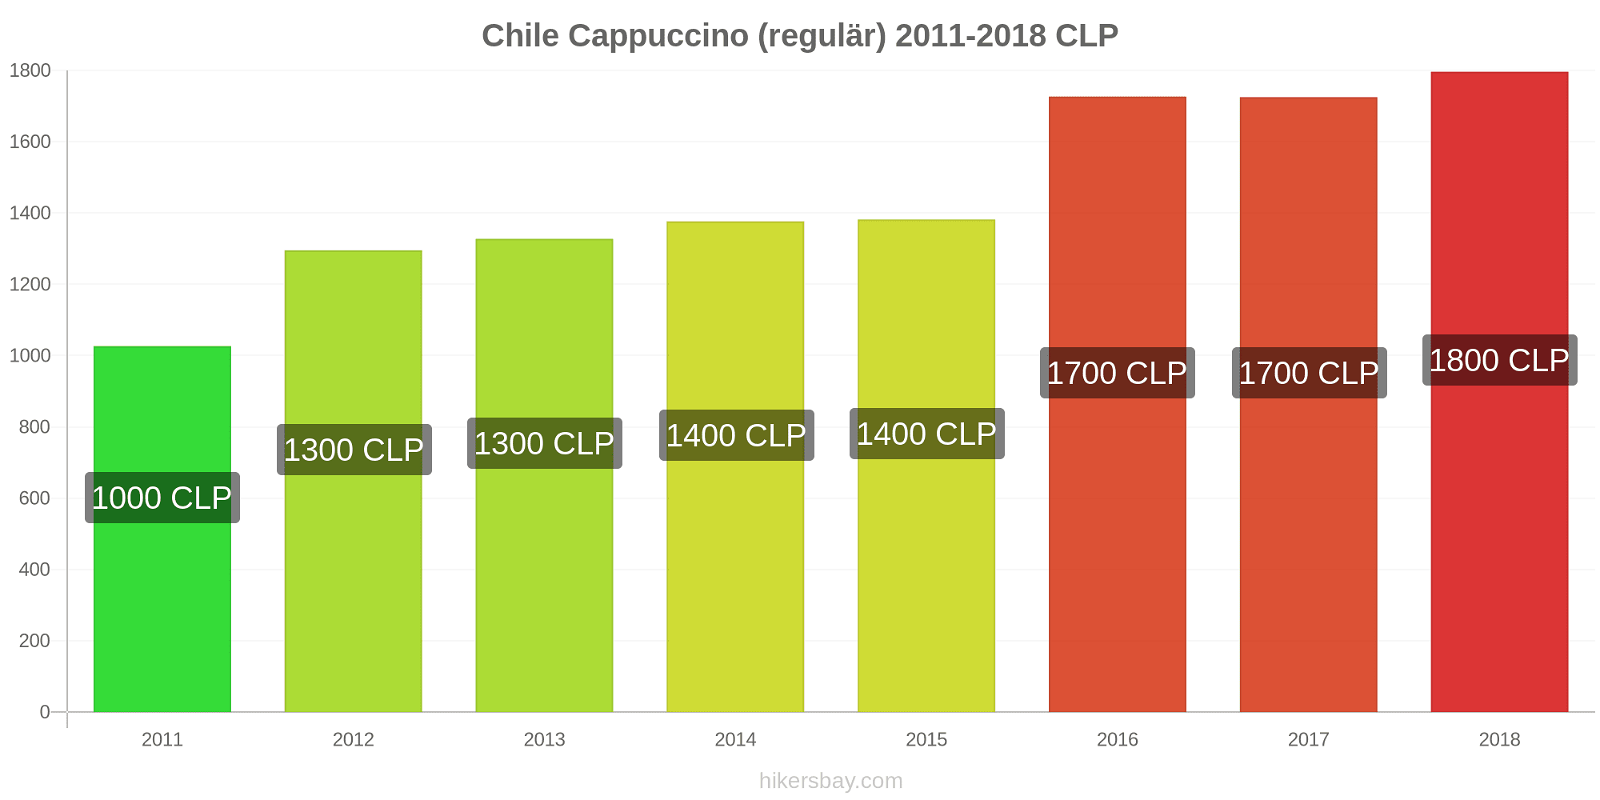 Chile Preisänderungen Cappuccino (regulär) hikersbay.com